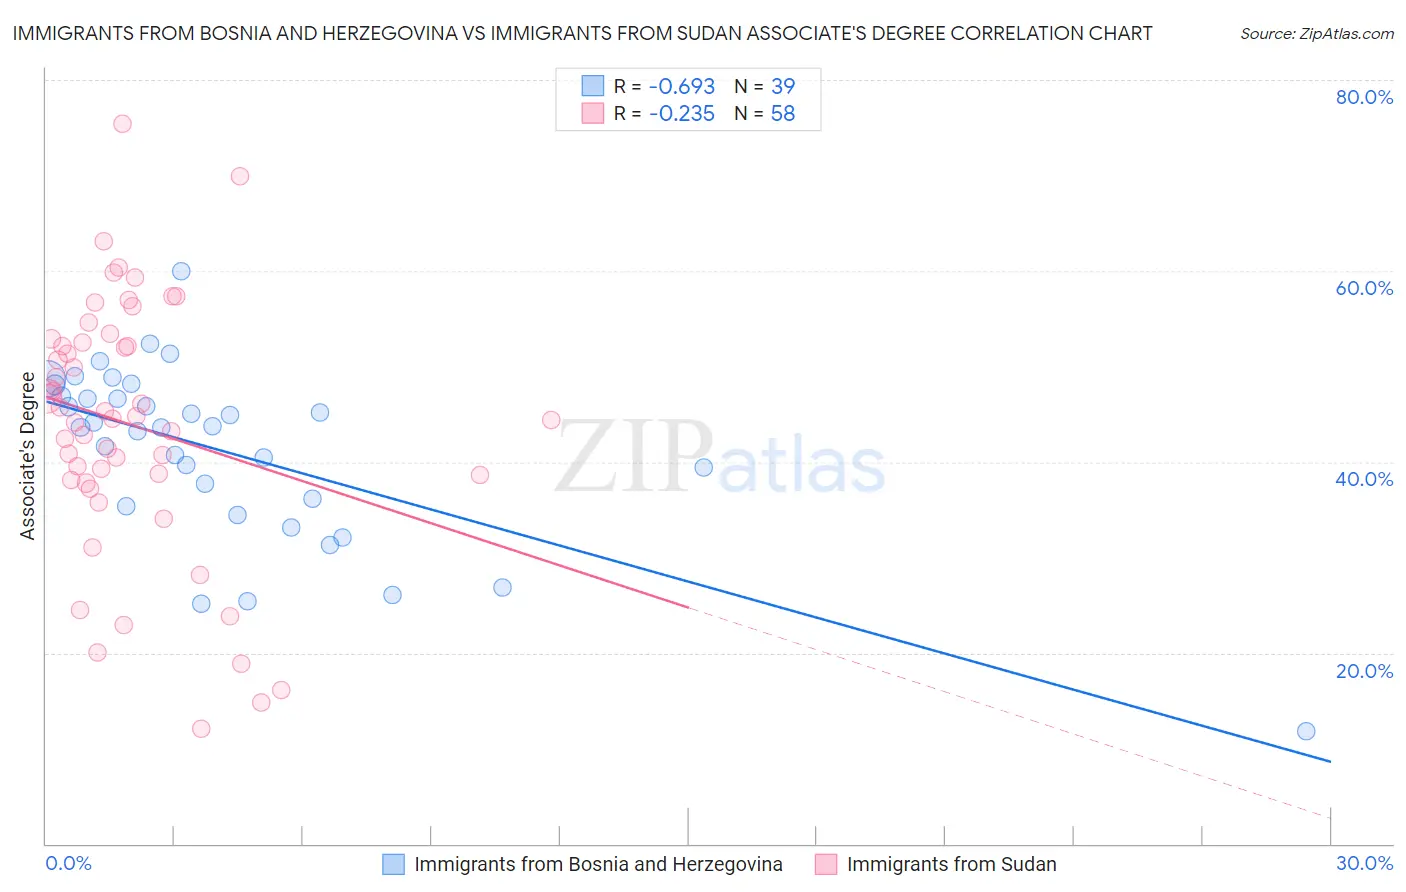 Immigrants from Bosnia and Herzegovina vs Immigrants from Sudan Associate's Degree